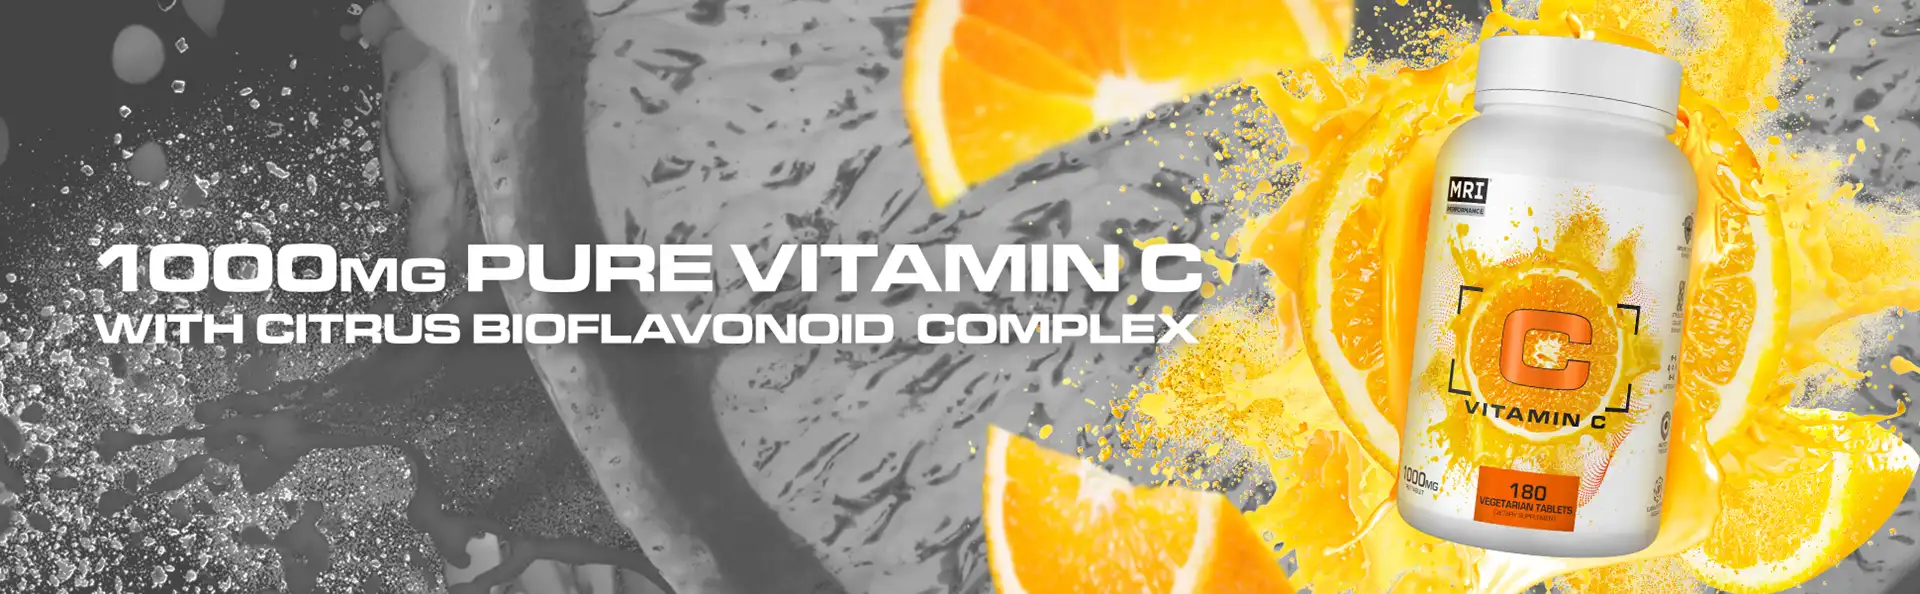 Vitamin C Bottom Banner